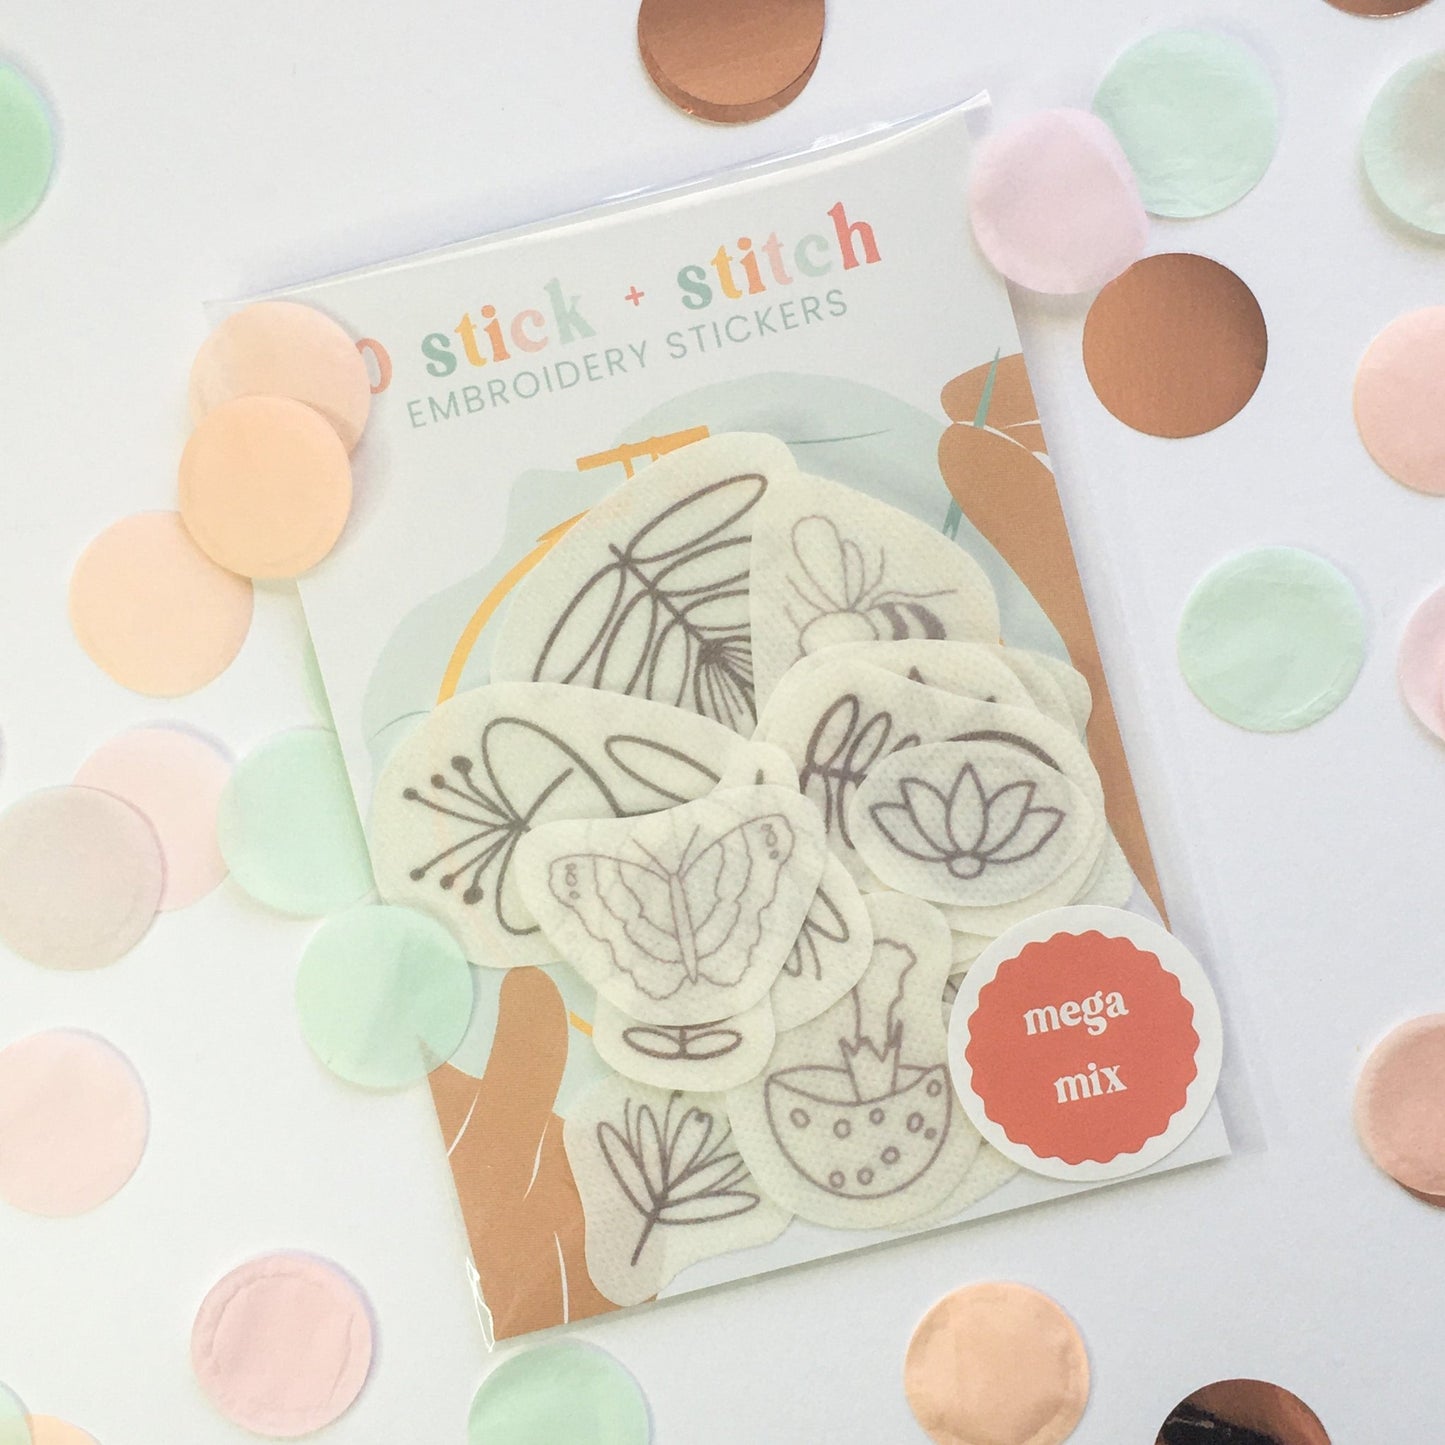 Mega Mix Stick and Stitch Embroidery Stickers - Craft Make Do